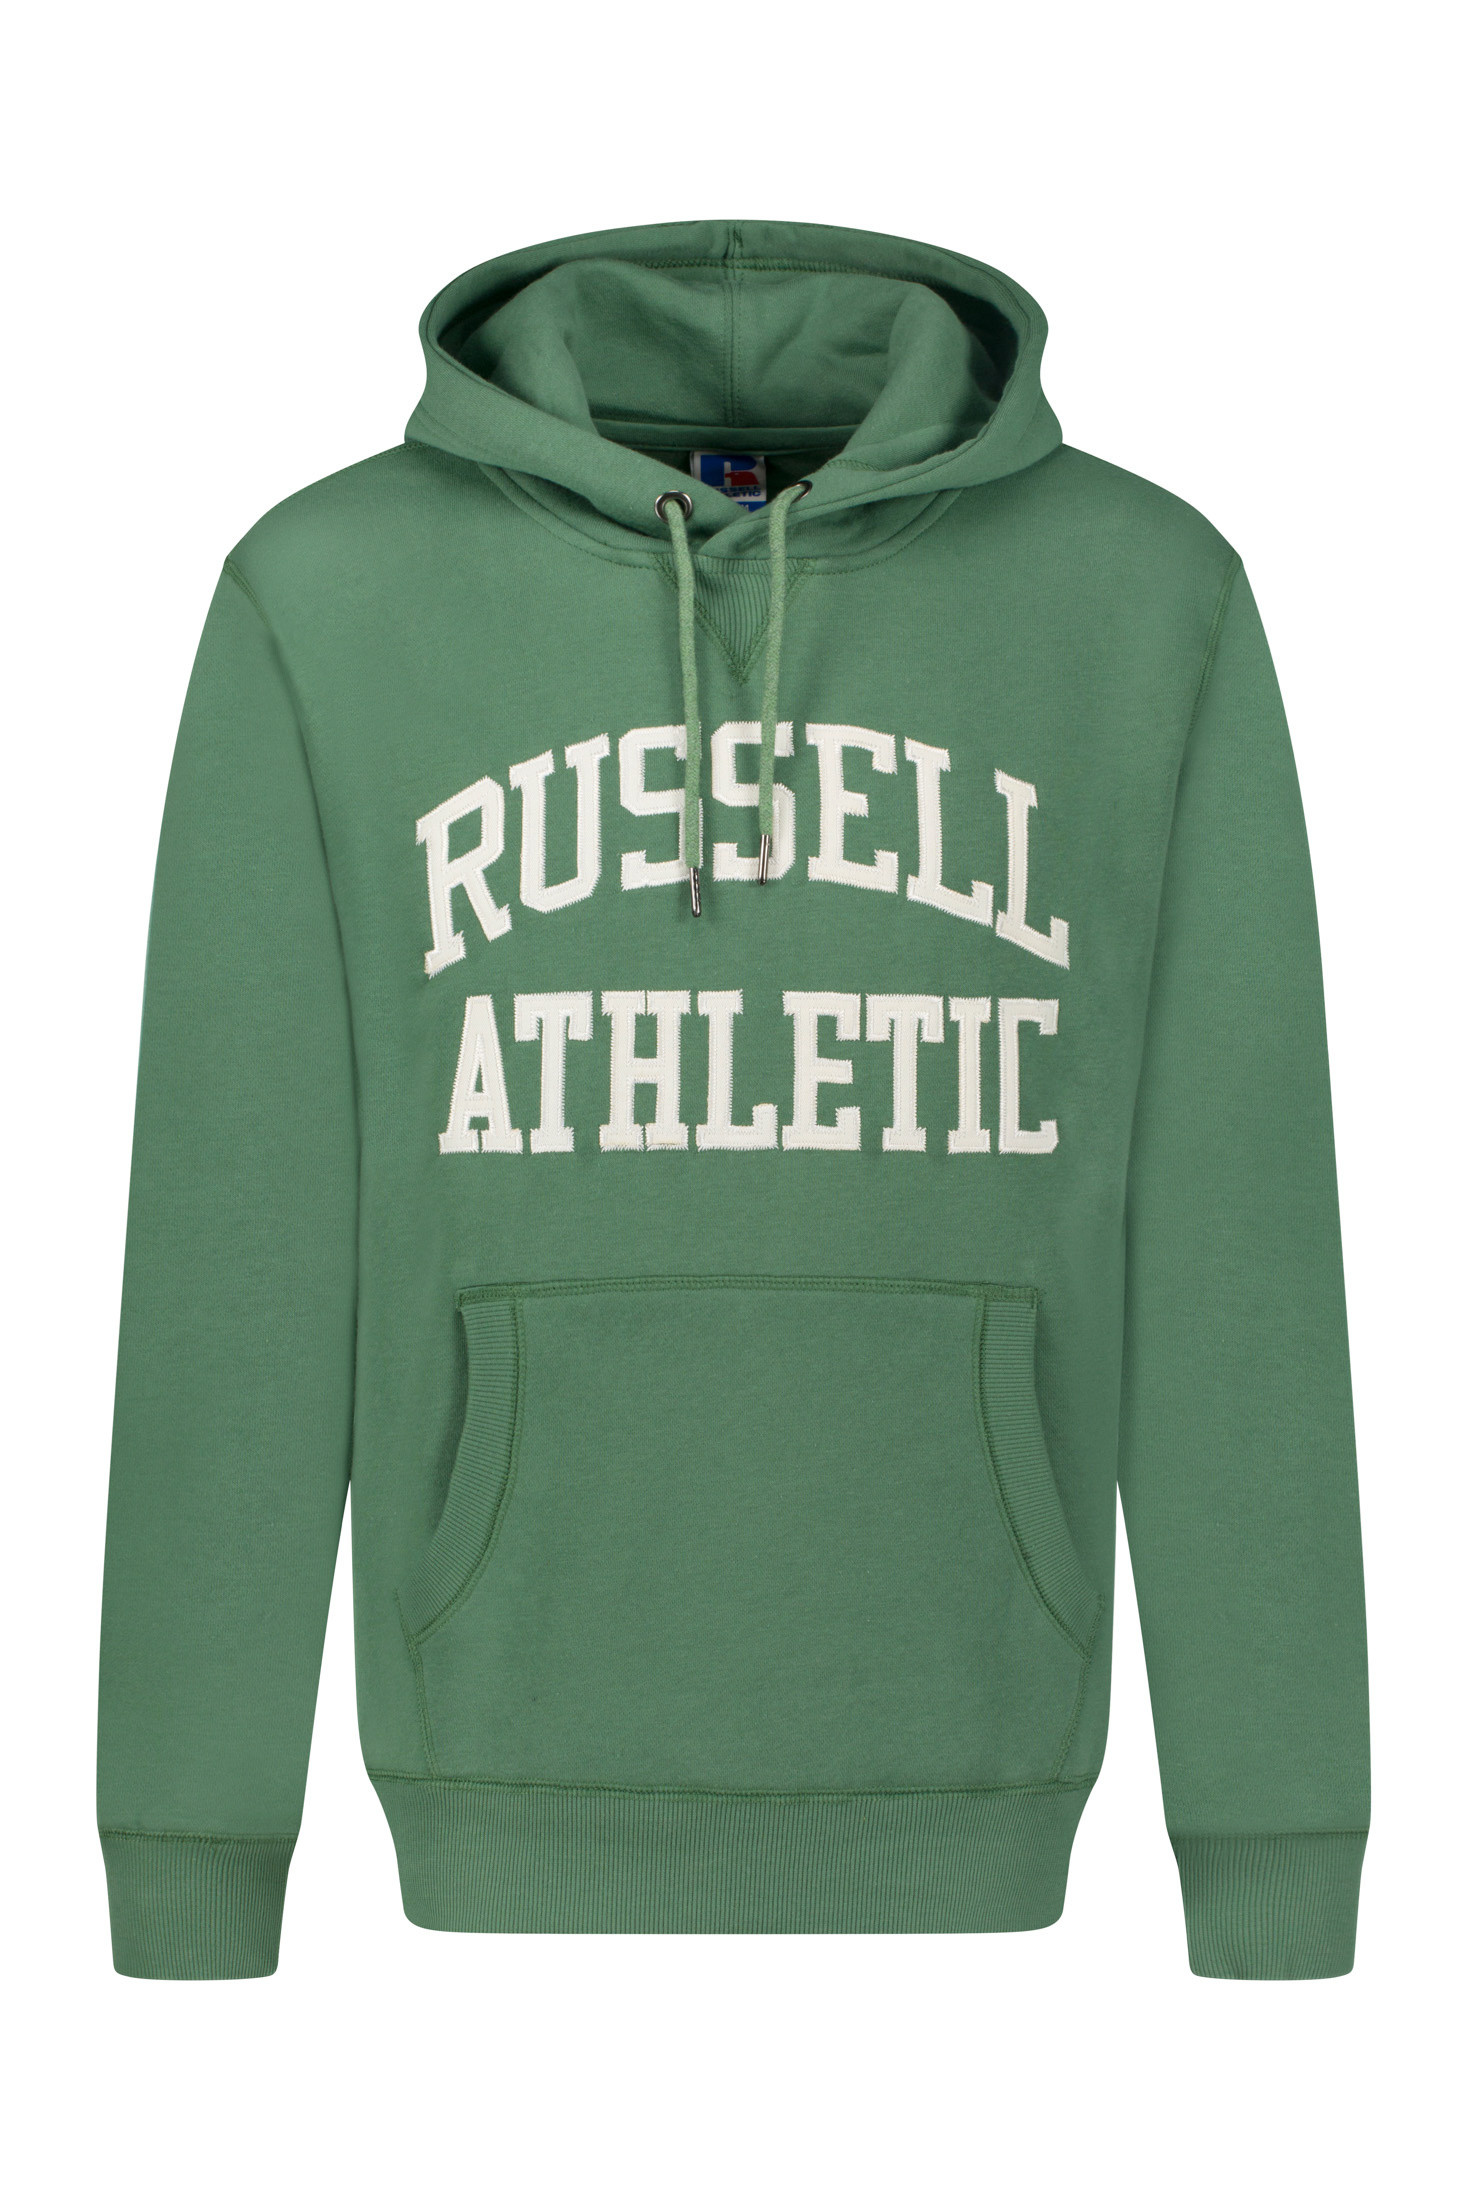 Russell Athletic - Felpa con cappuccio, Verde chiaro, large image number 0